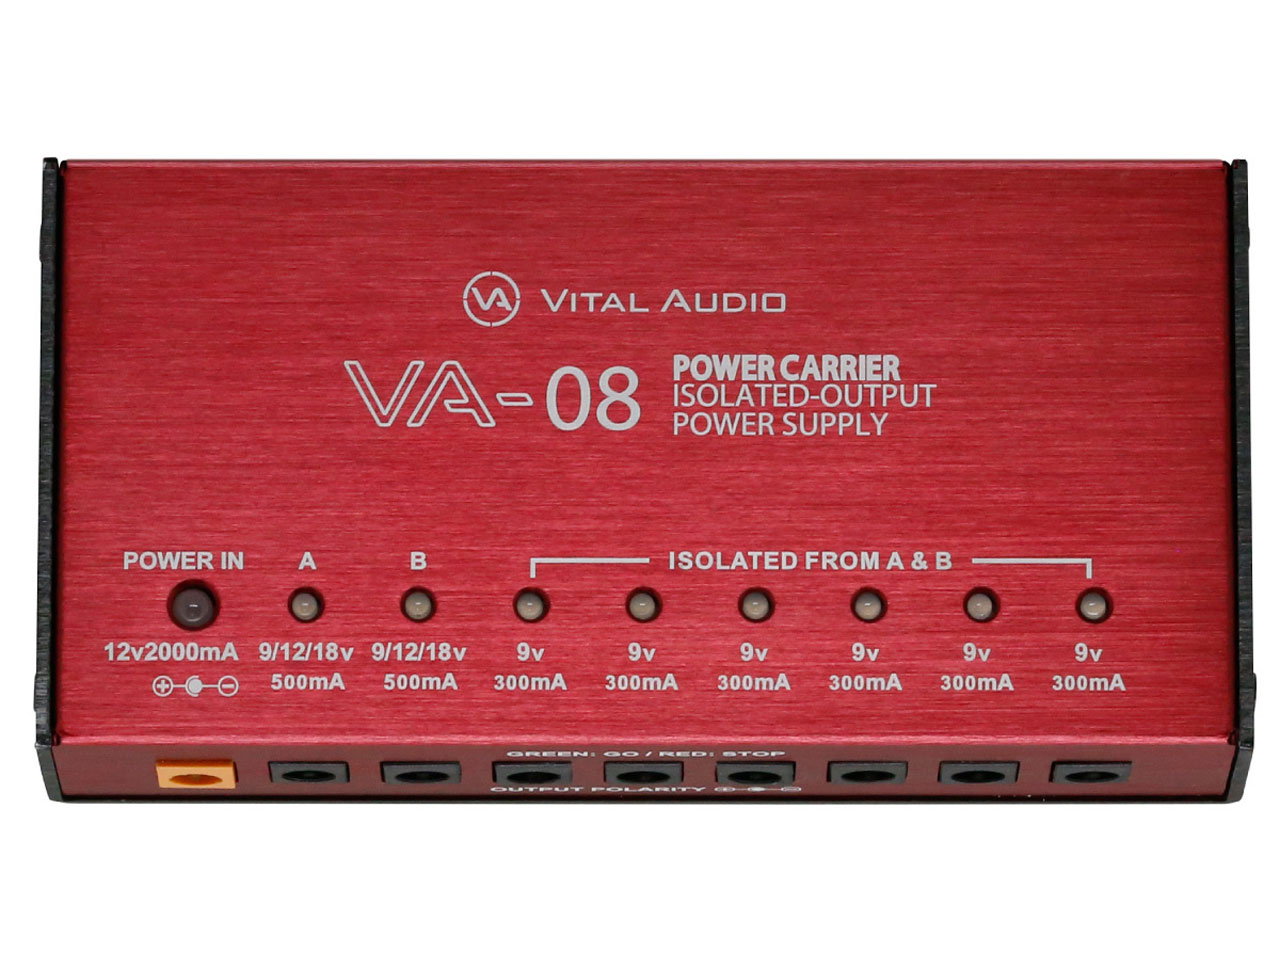 Vital Audio(バイタルオーディオ) POWER CARRIER VA-08 MkⅡ (パワーサプライ) 駅前店